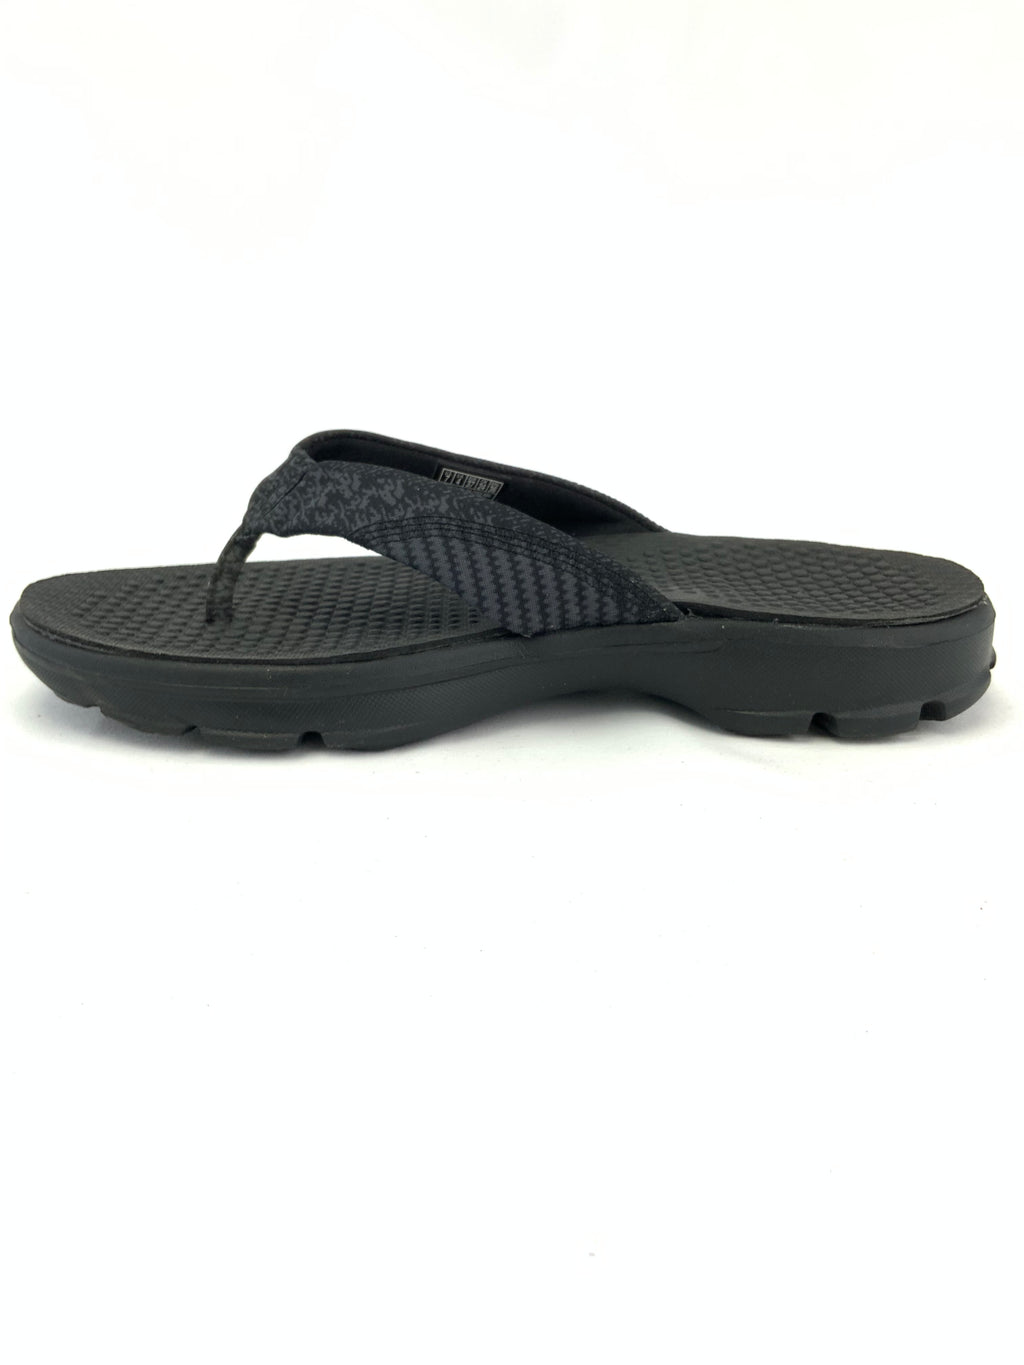 skechers sandals size 7